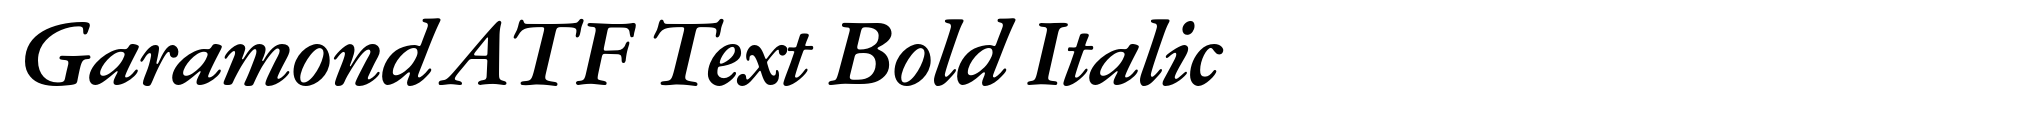 Garamond ATF Text Bold Italic image